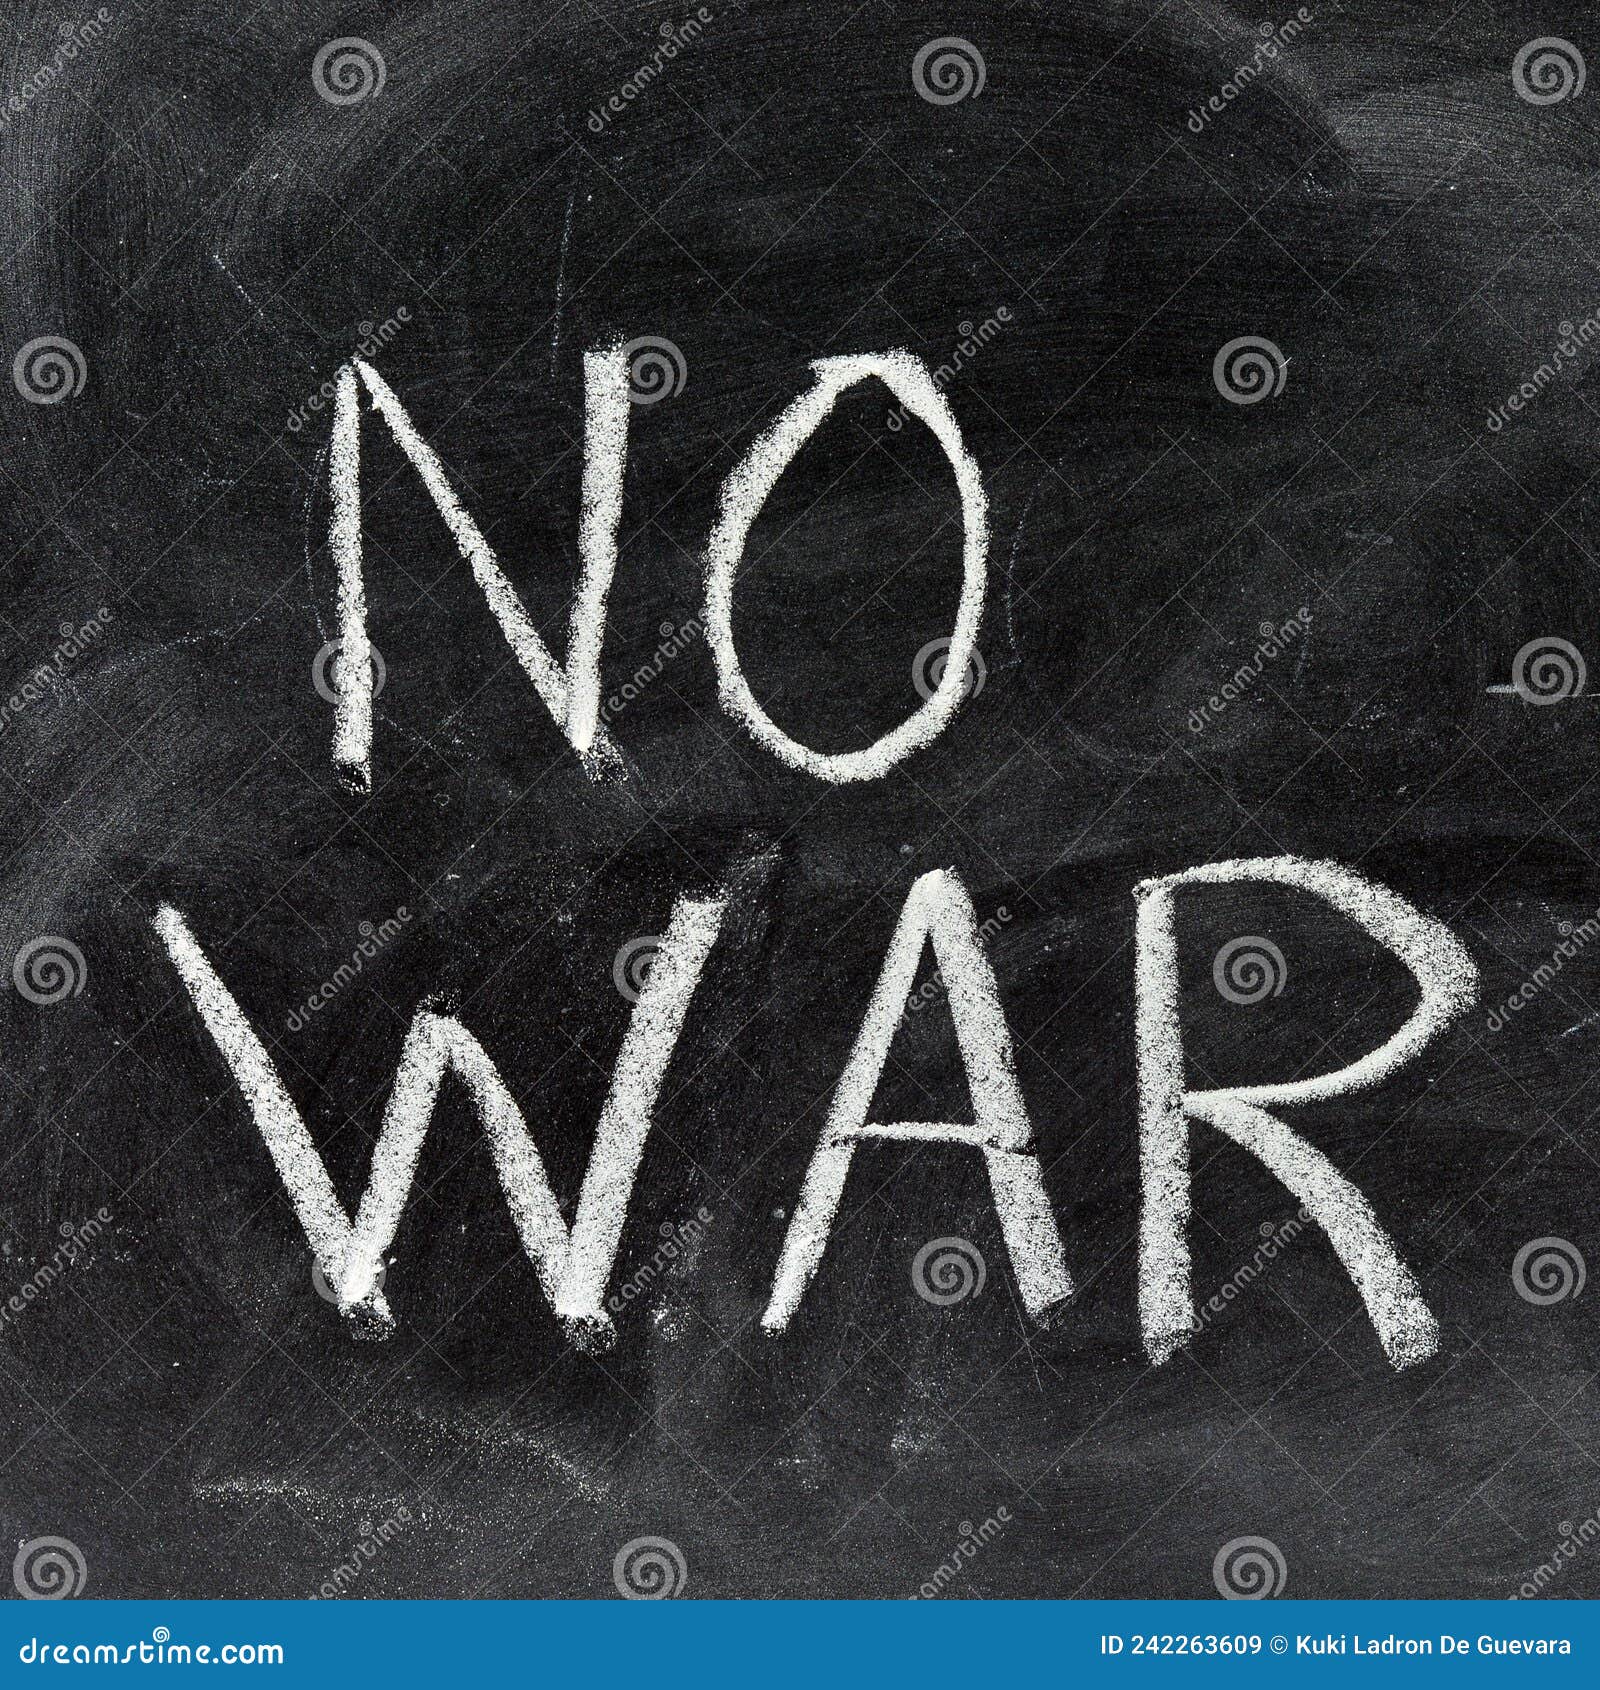 no war, handwritten with a chalk on the blackboard